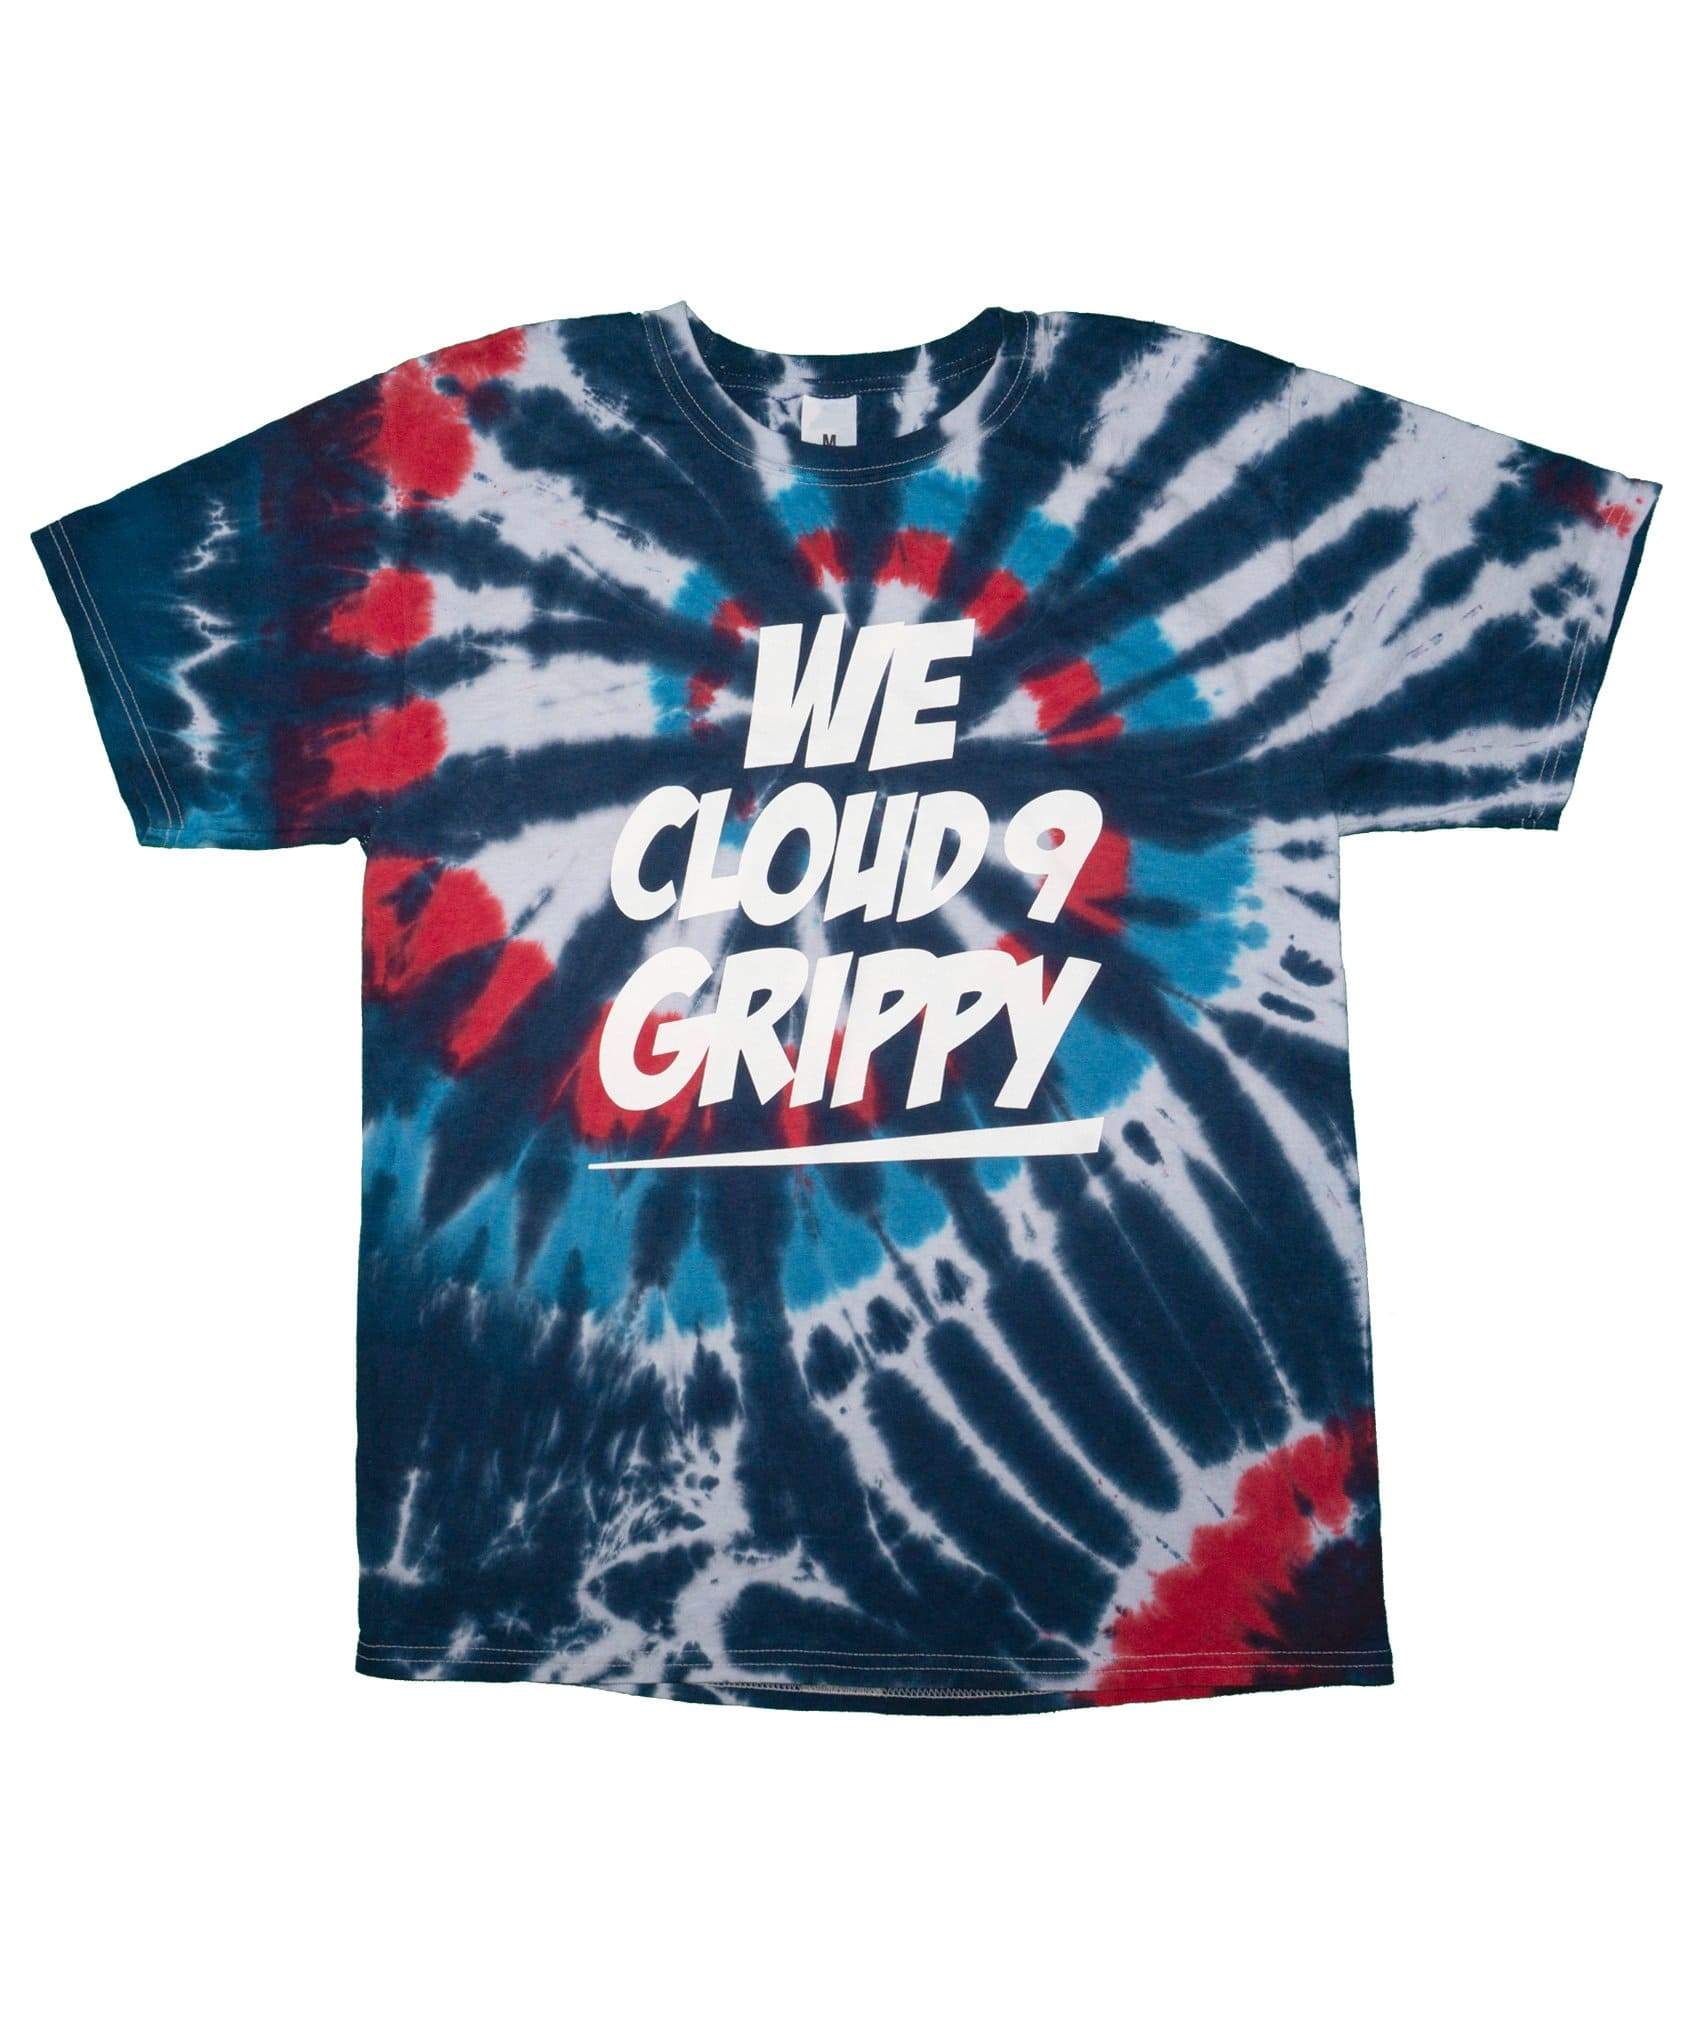 We Cloud 9 Grippy Tie Dye - Skate T-shirt - Cloud 9 Griptape